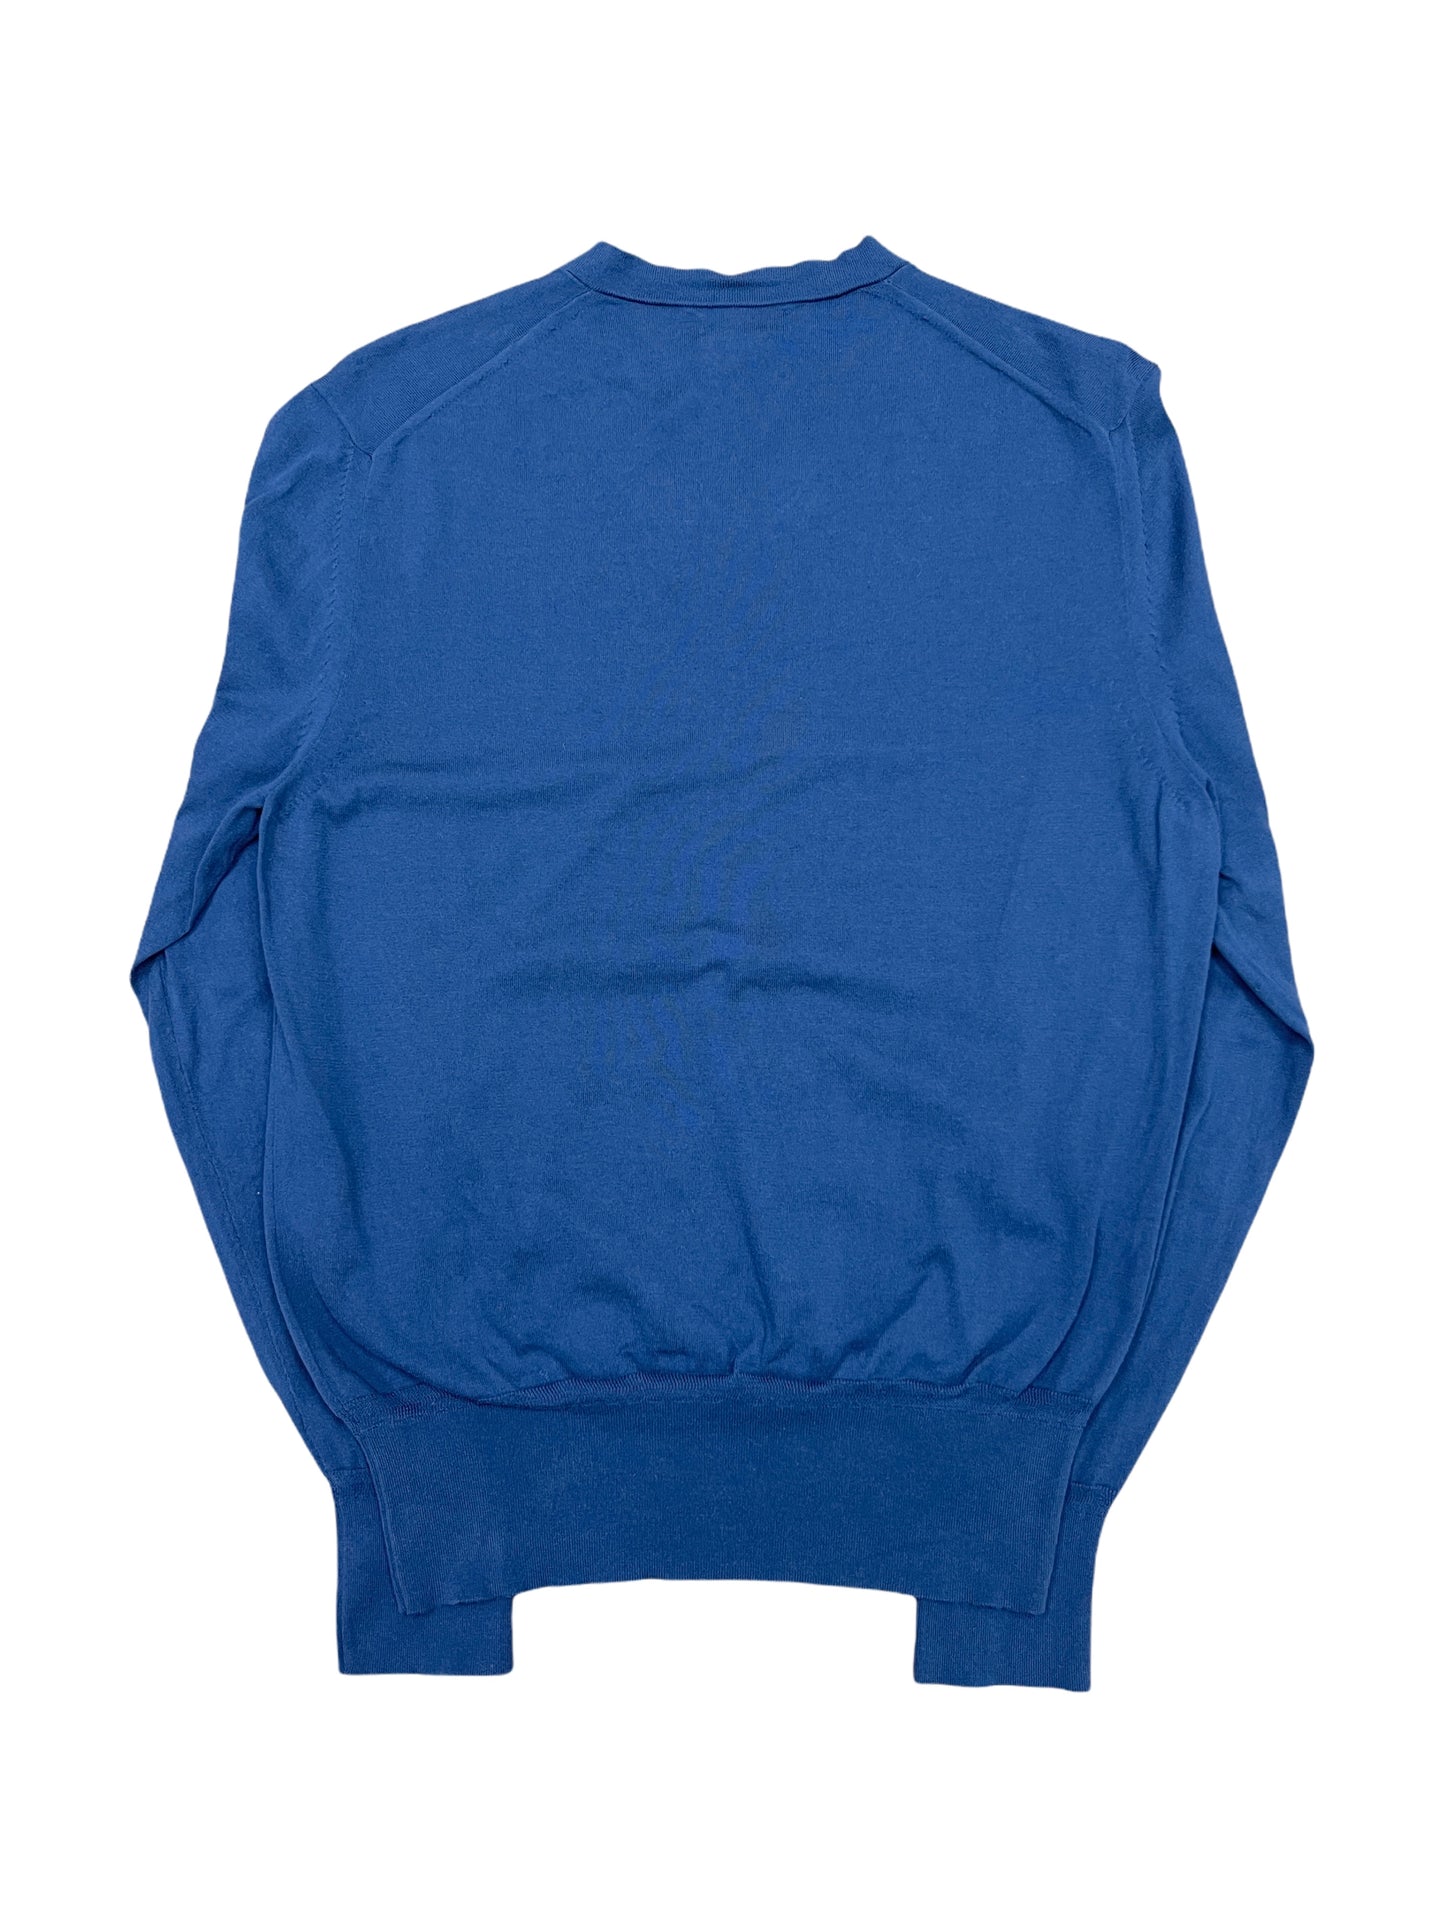 TOM FORD Steel Blue V-Neck Cotton Sweater 50 - M